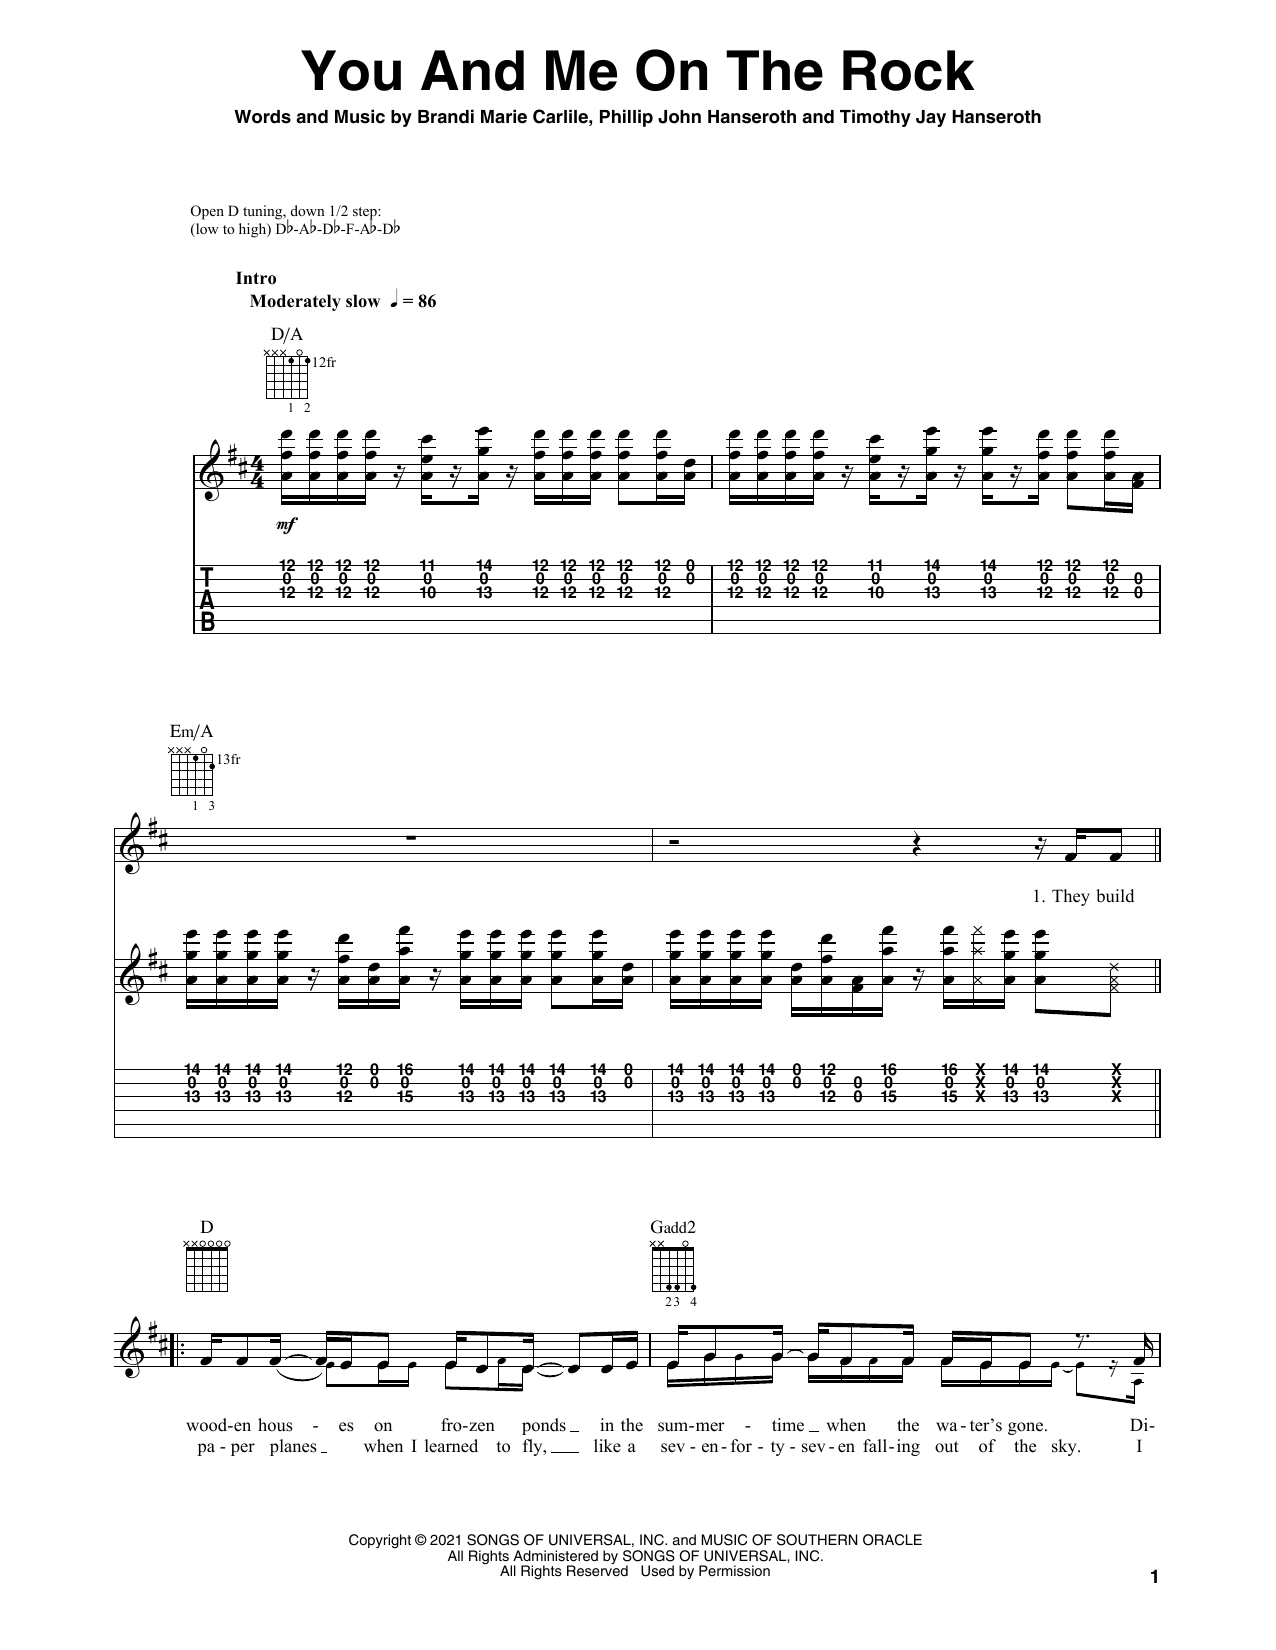 mariposa Hamburguesa Flexible Brandi Carlile "You And Me On The Rock (feat. Lucius)" Sheet Music |  Download Printable PDF Score. SKU 513728